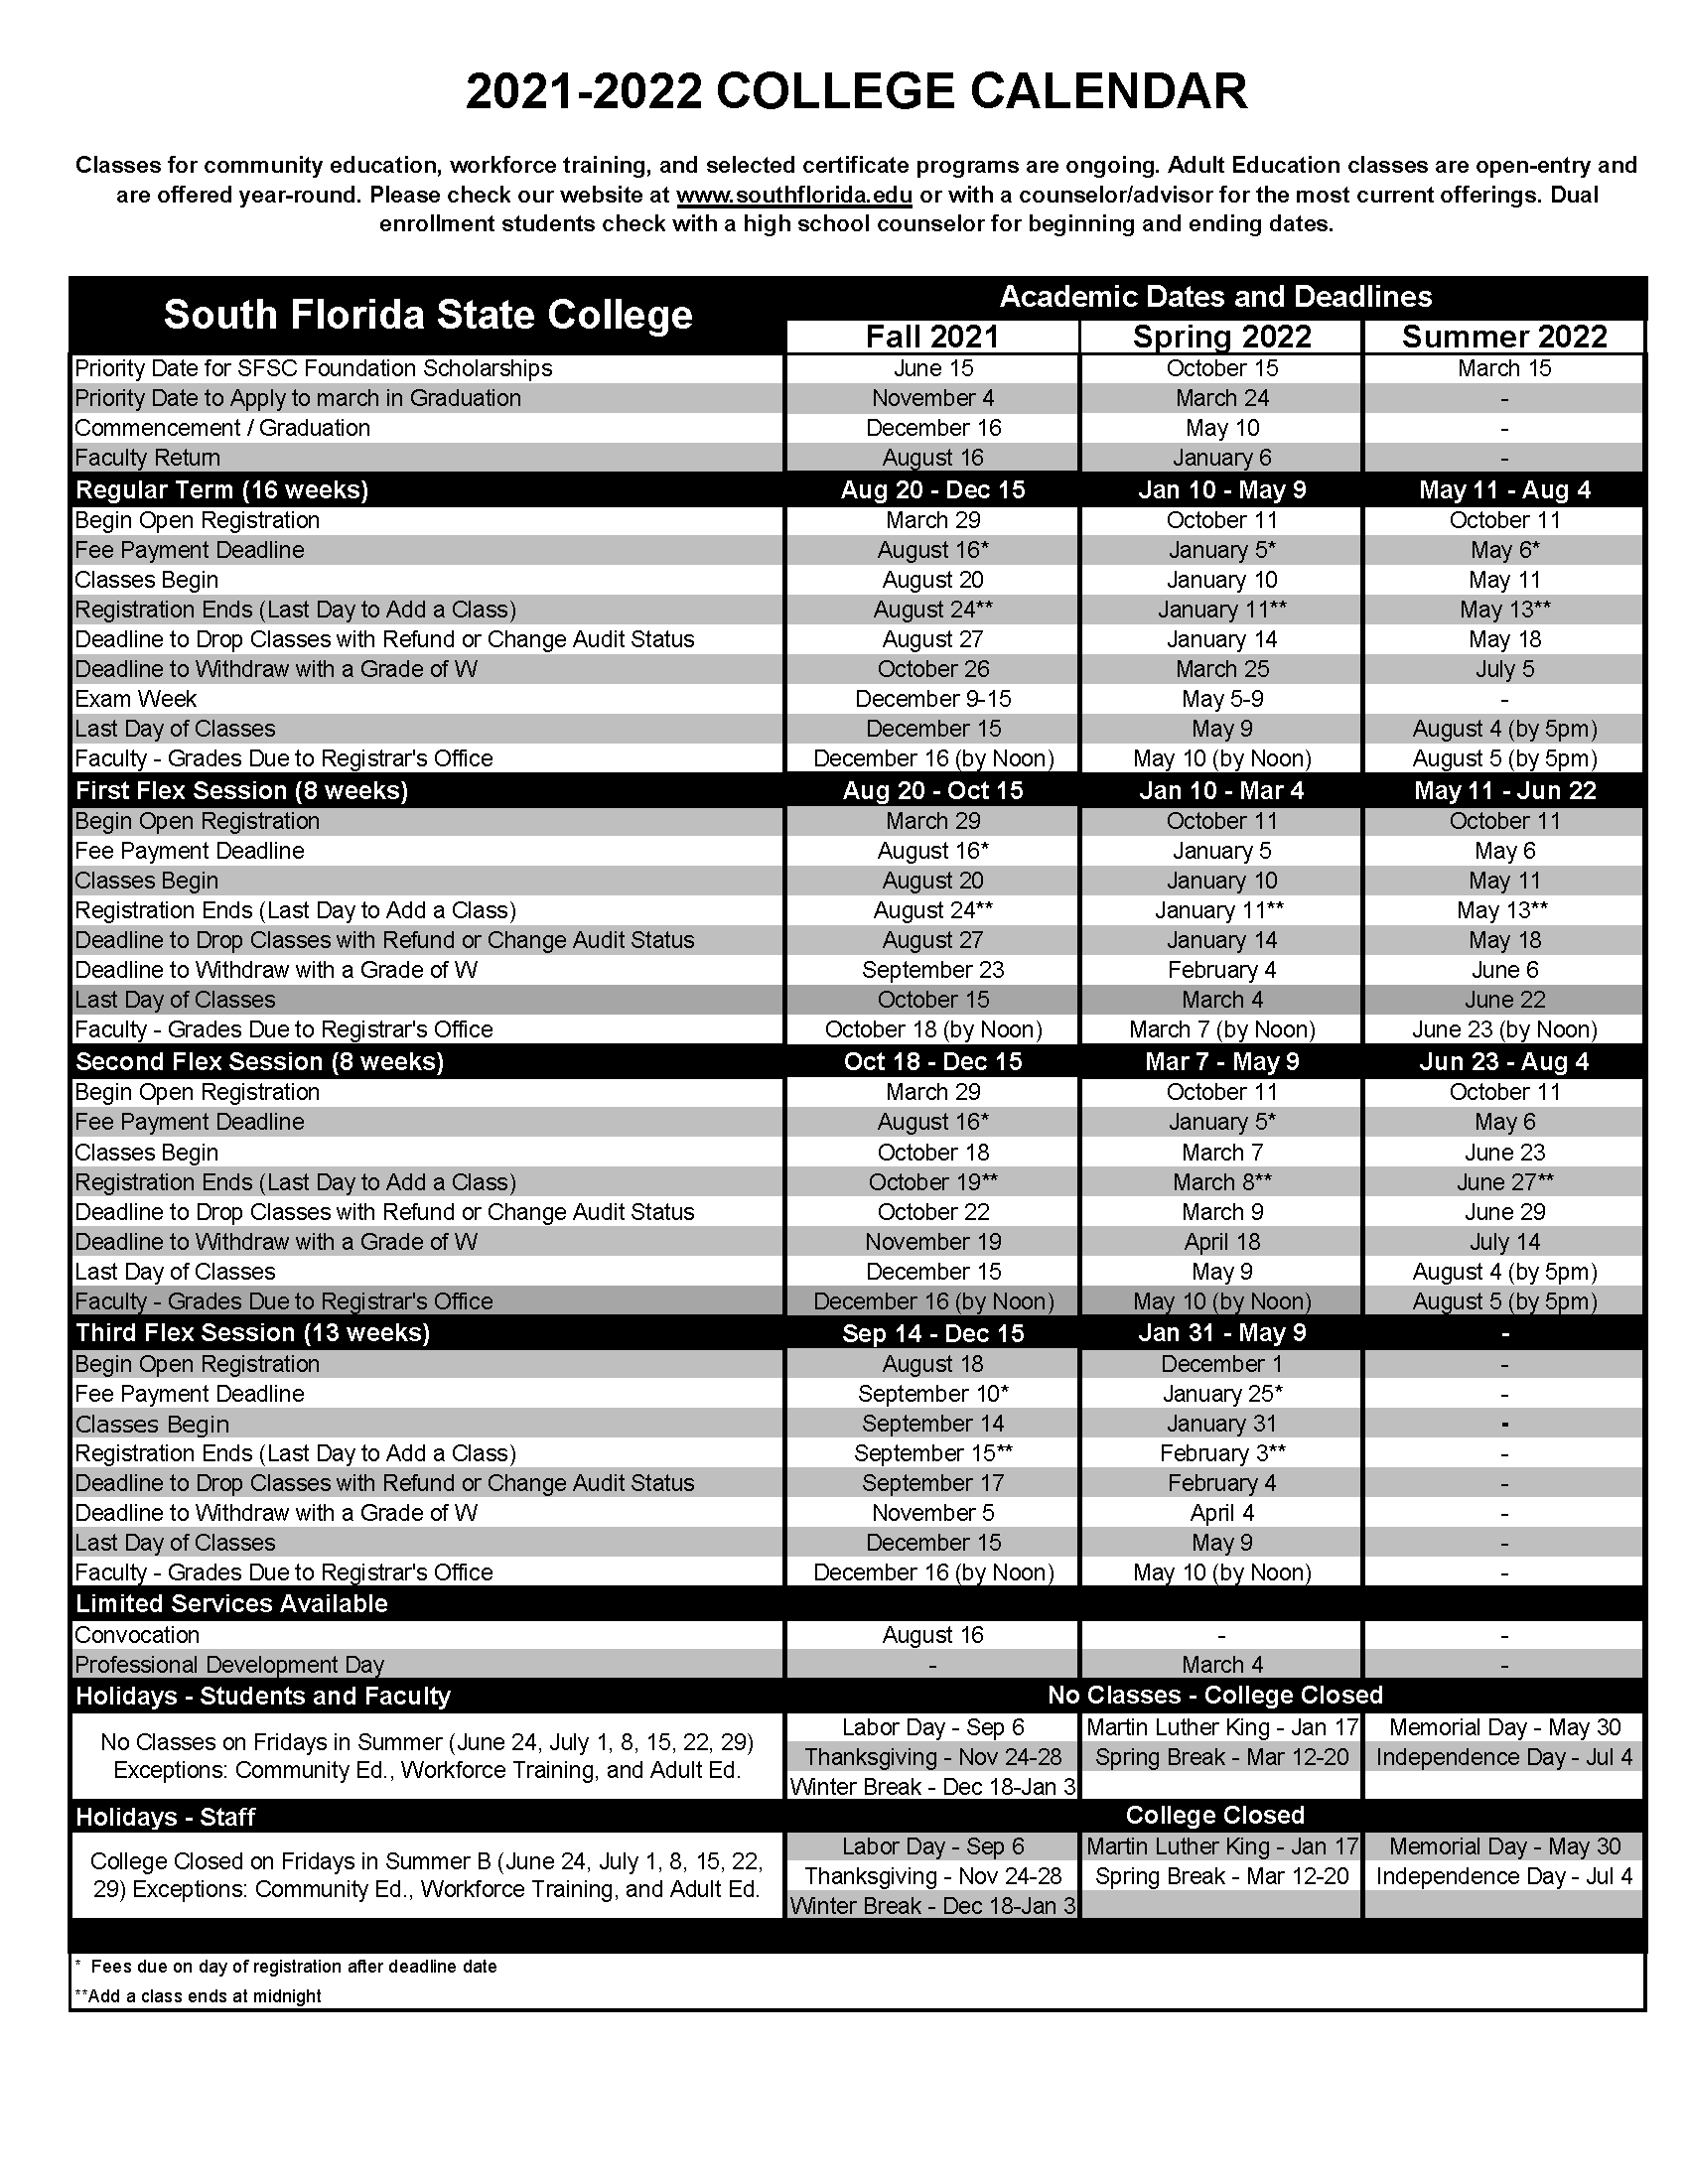 Florida State University Calendar 2022 Academic Calendar 2021-2022 - College